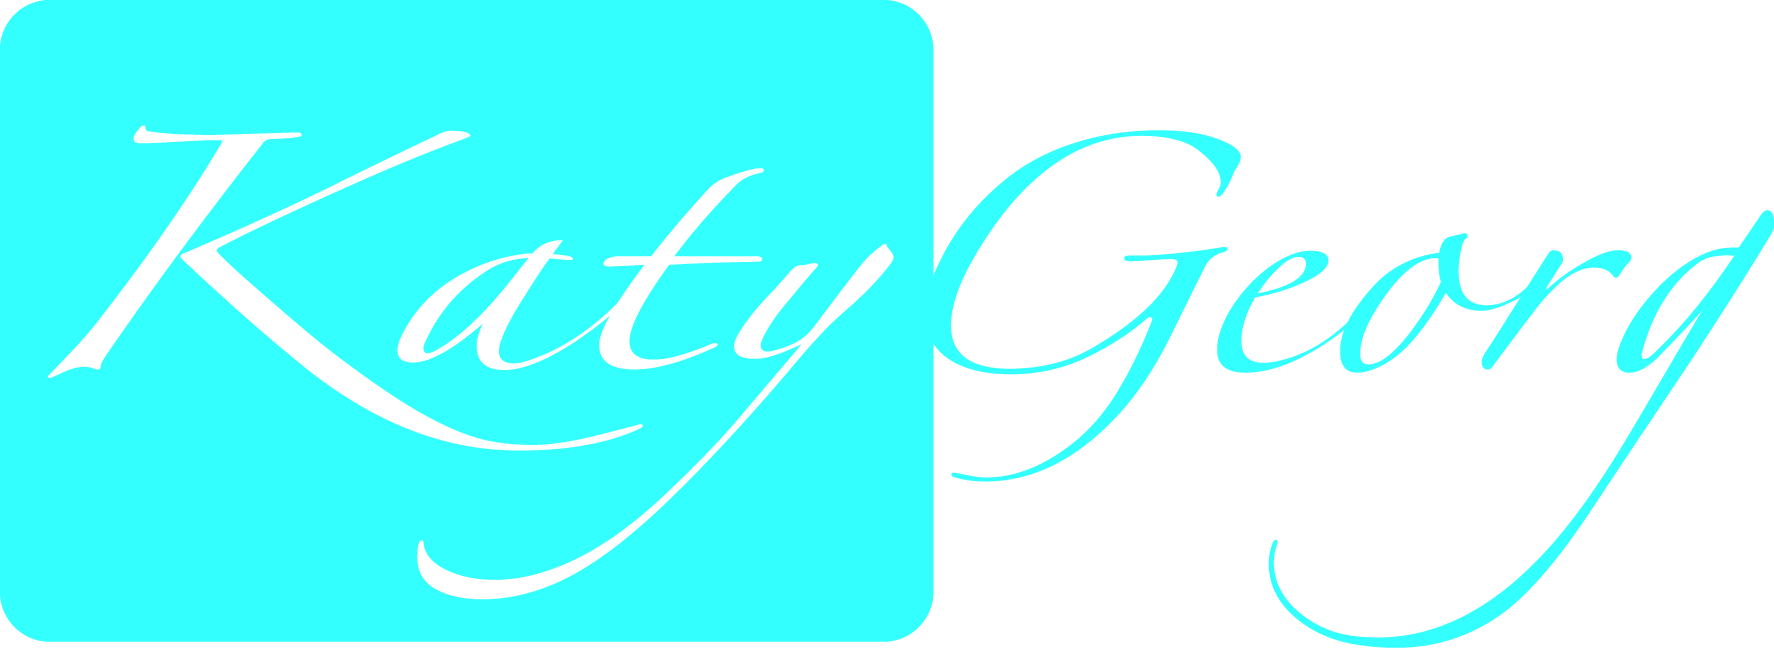 KatyGeorg logo